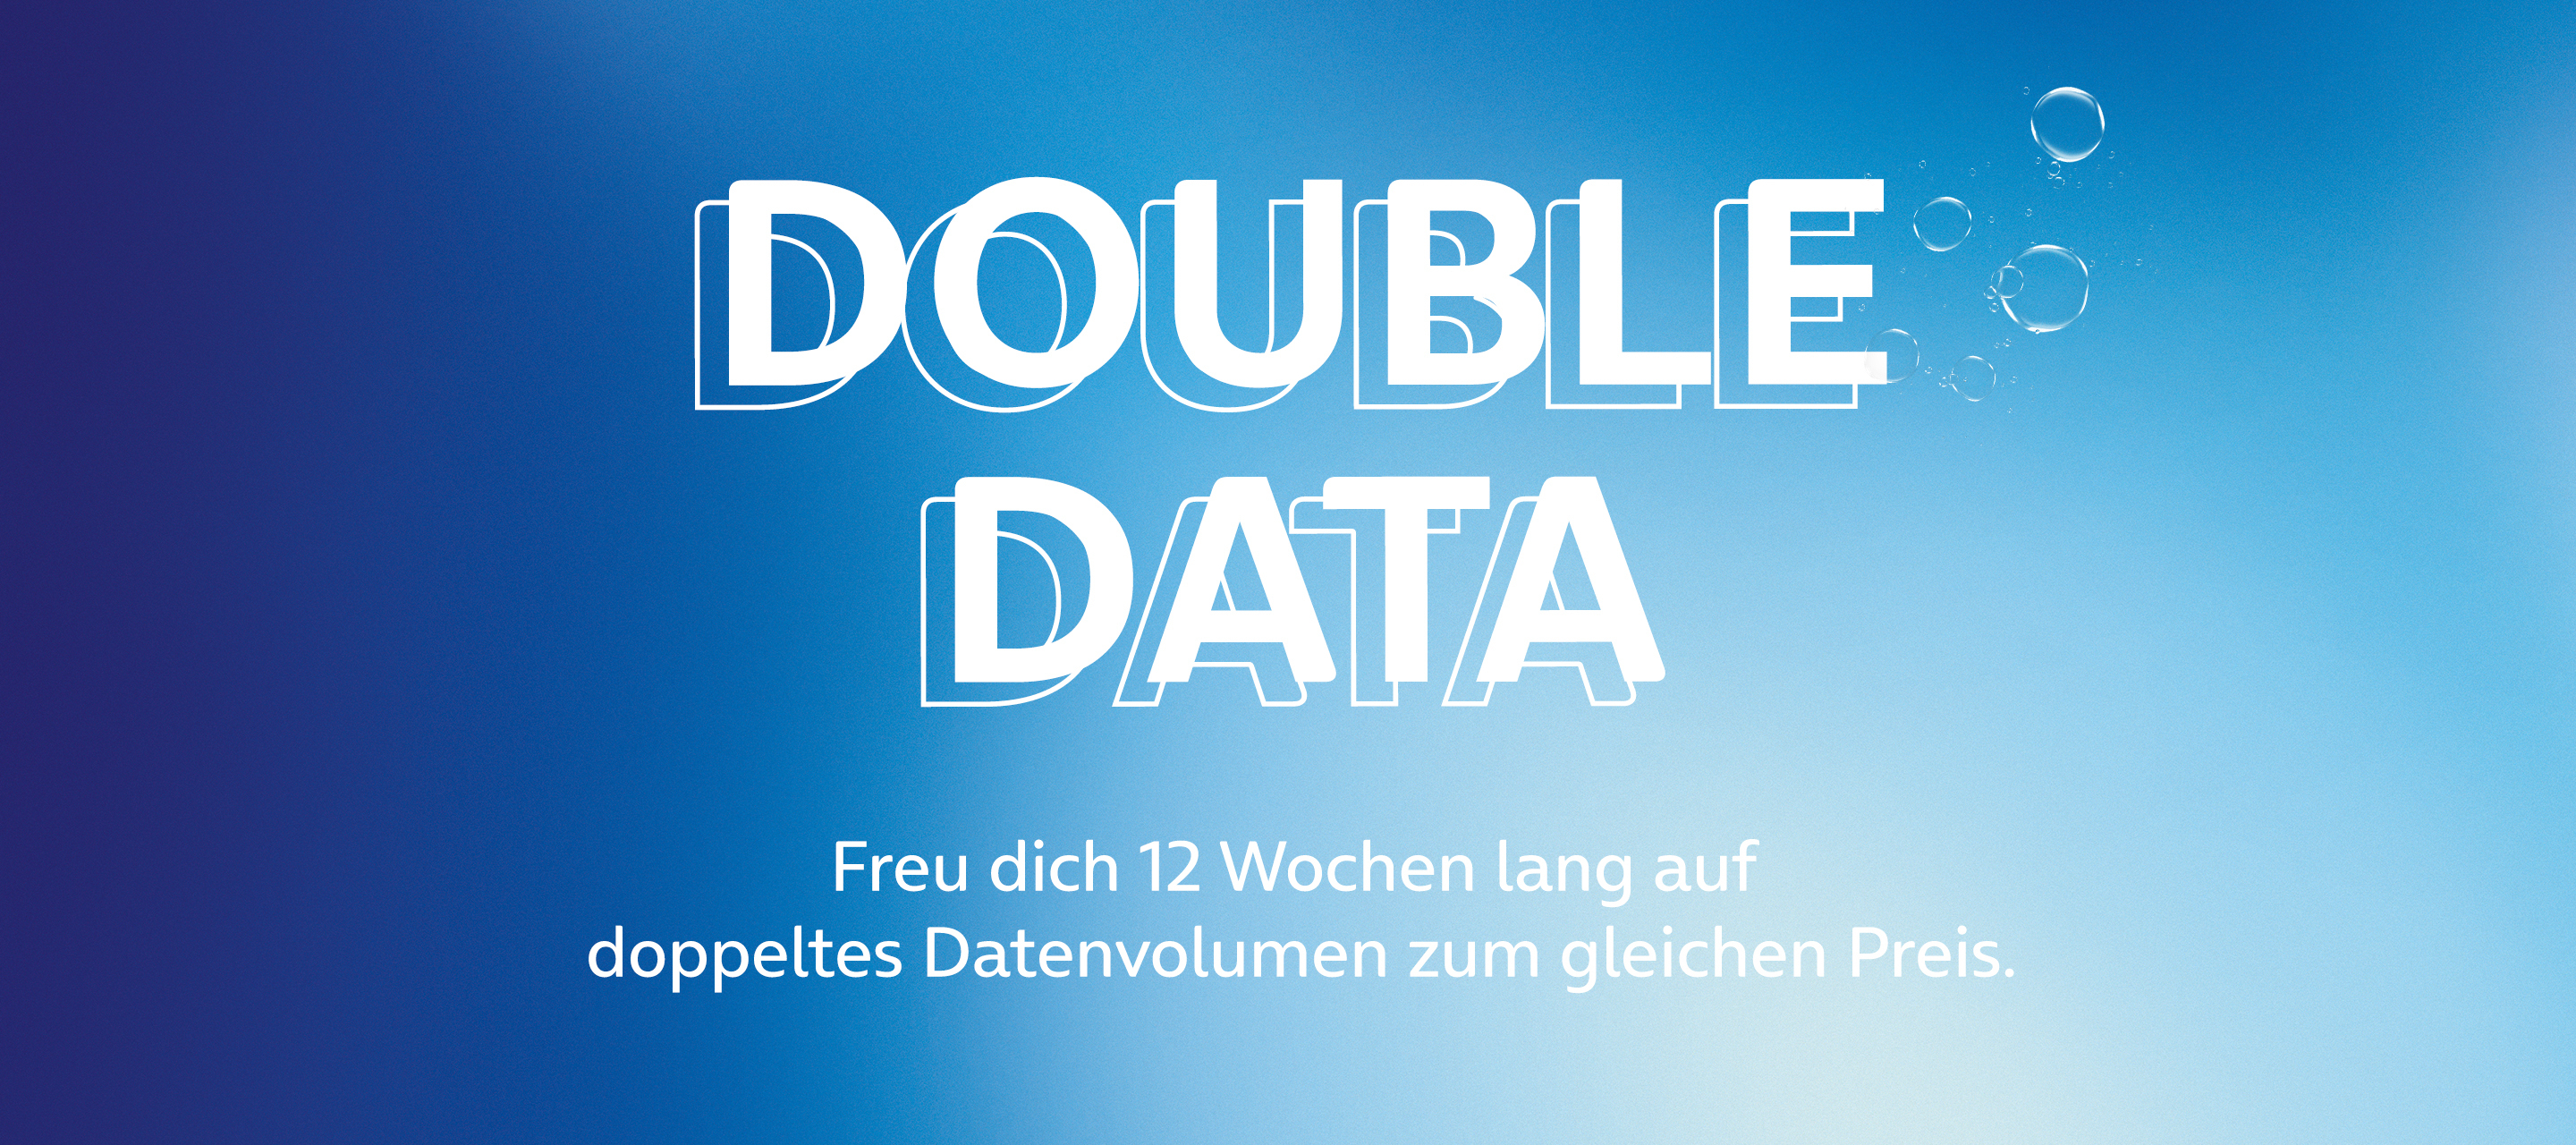 Doppelt hält besser - Prepaid Double Data Aktion bei O₂